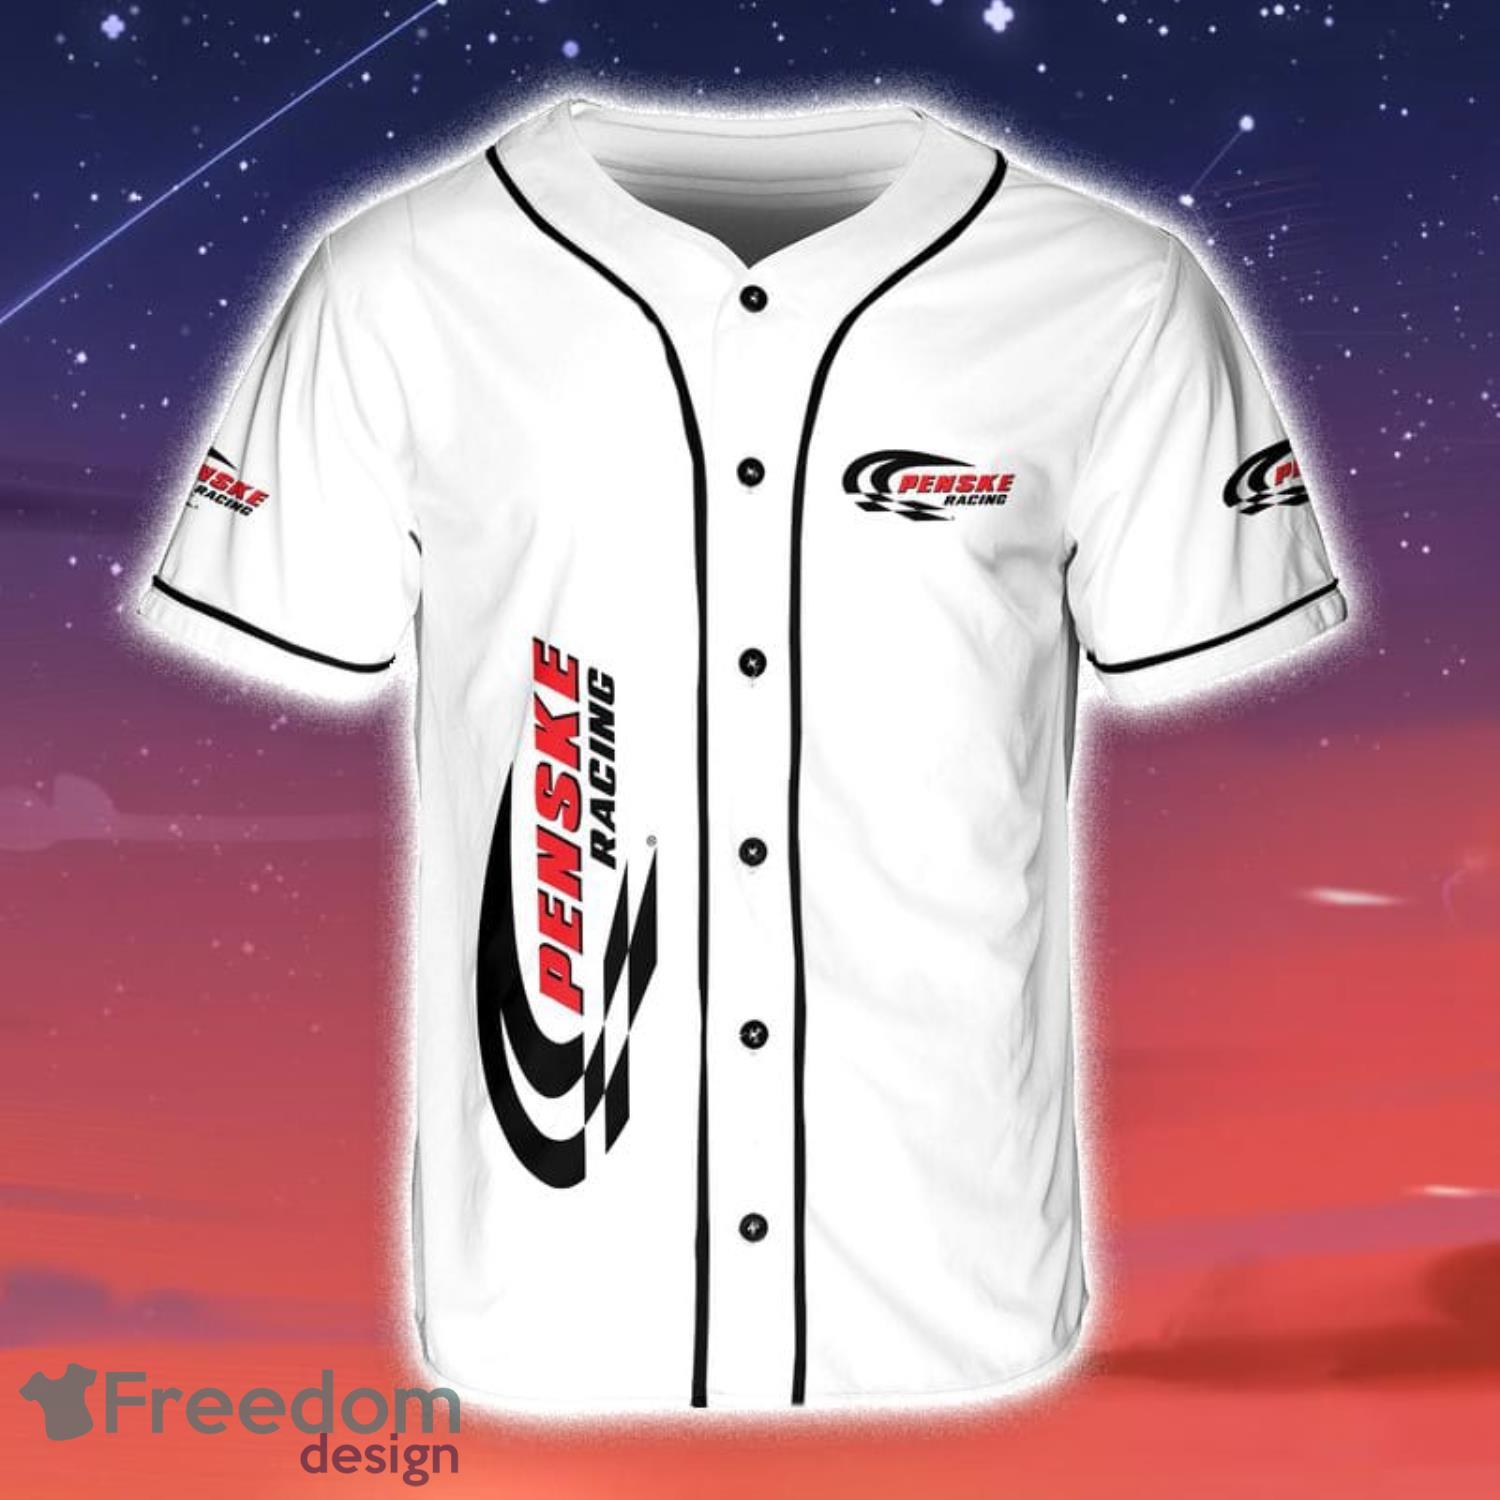 Team Penske Car Racing Baseball Jersey Shirt Summer Gift For Sport Fans -  Freedomdesign